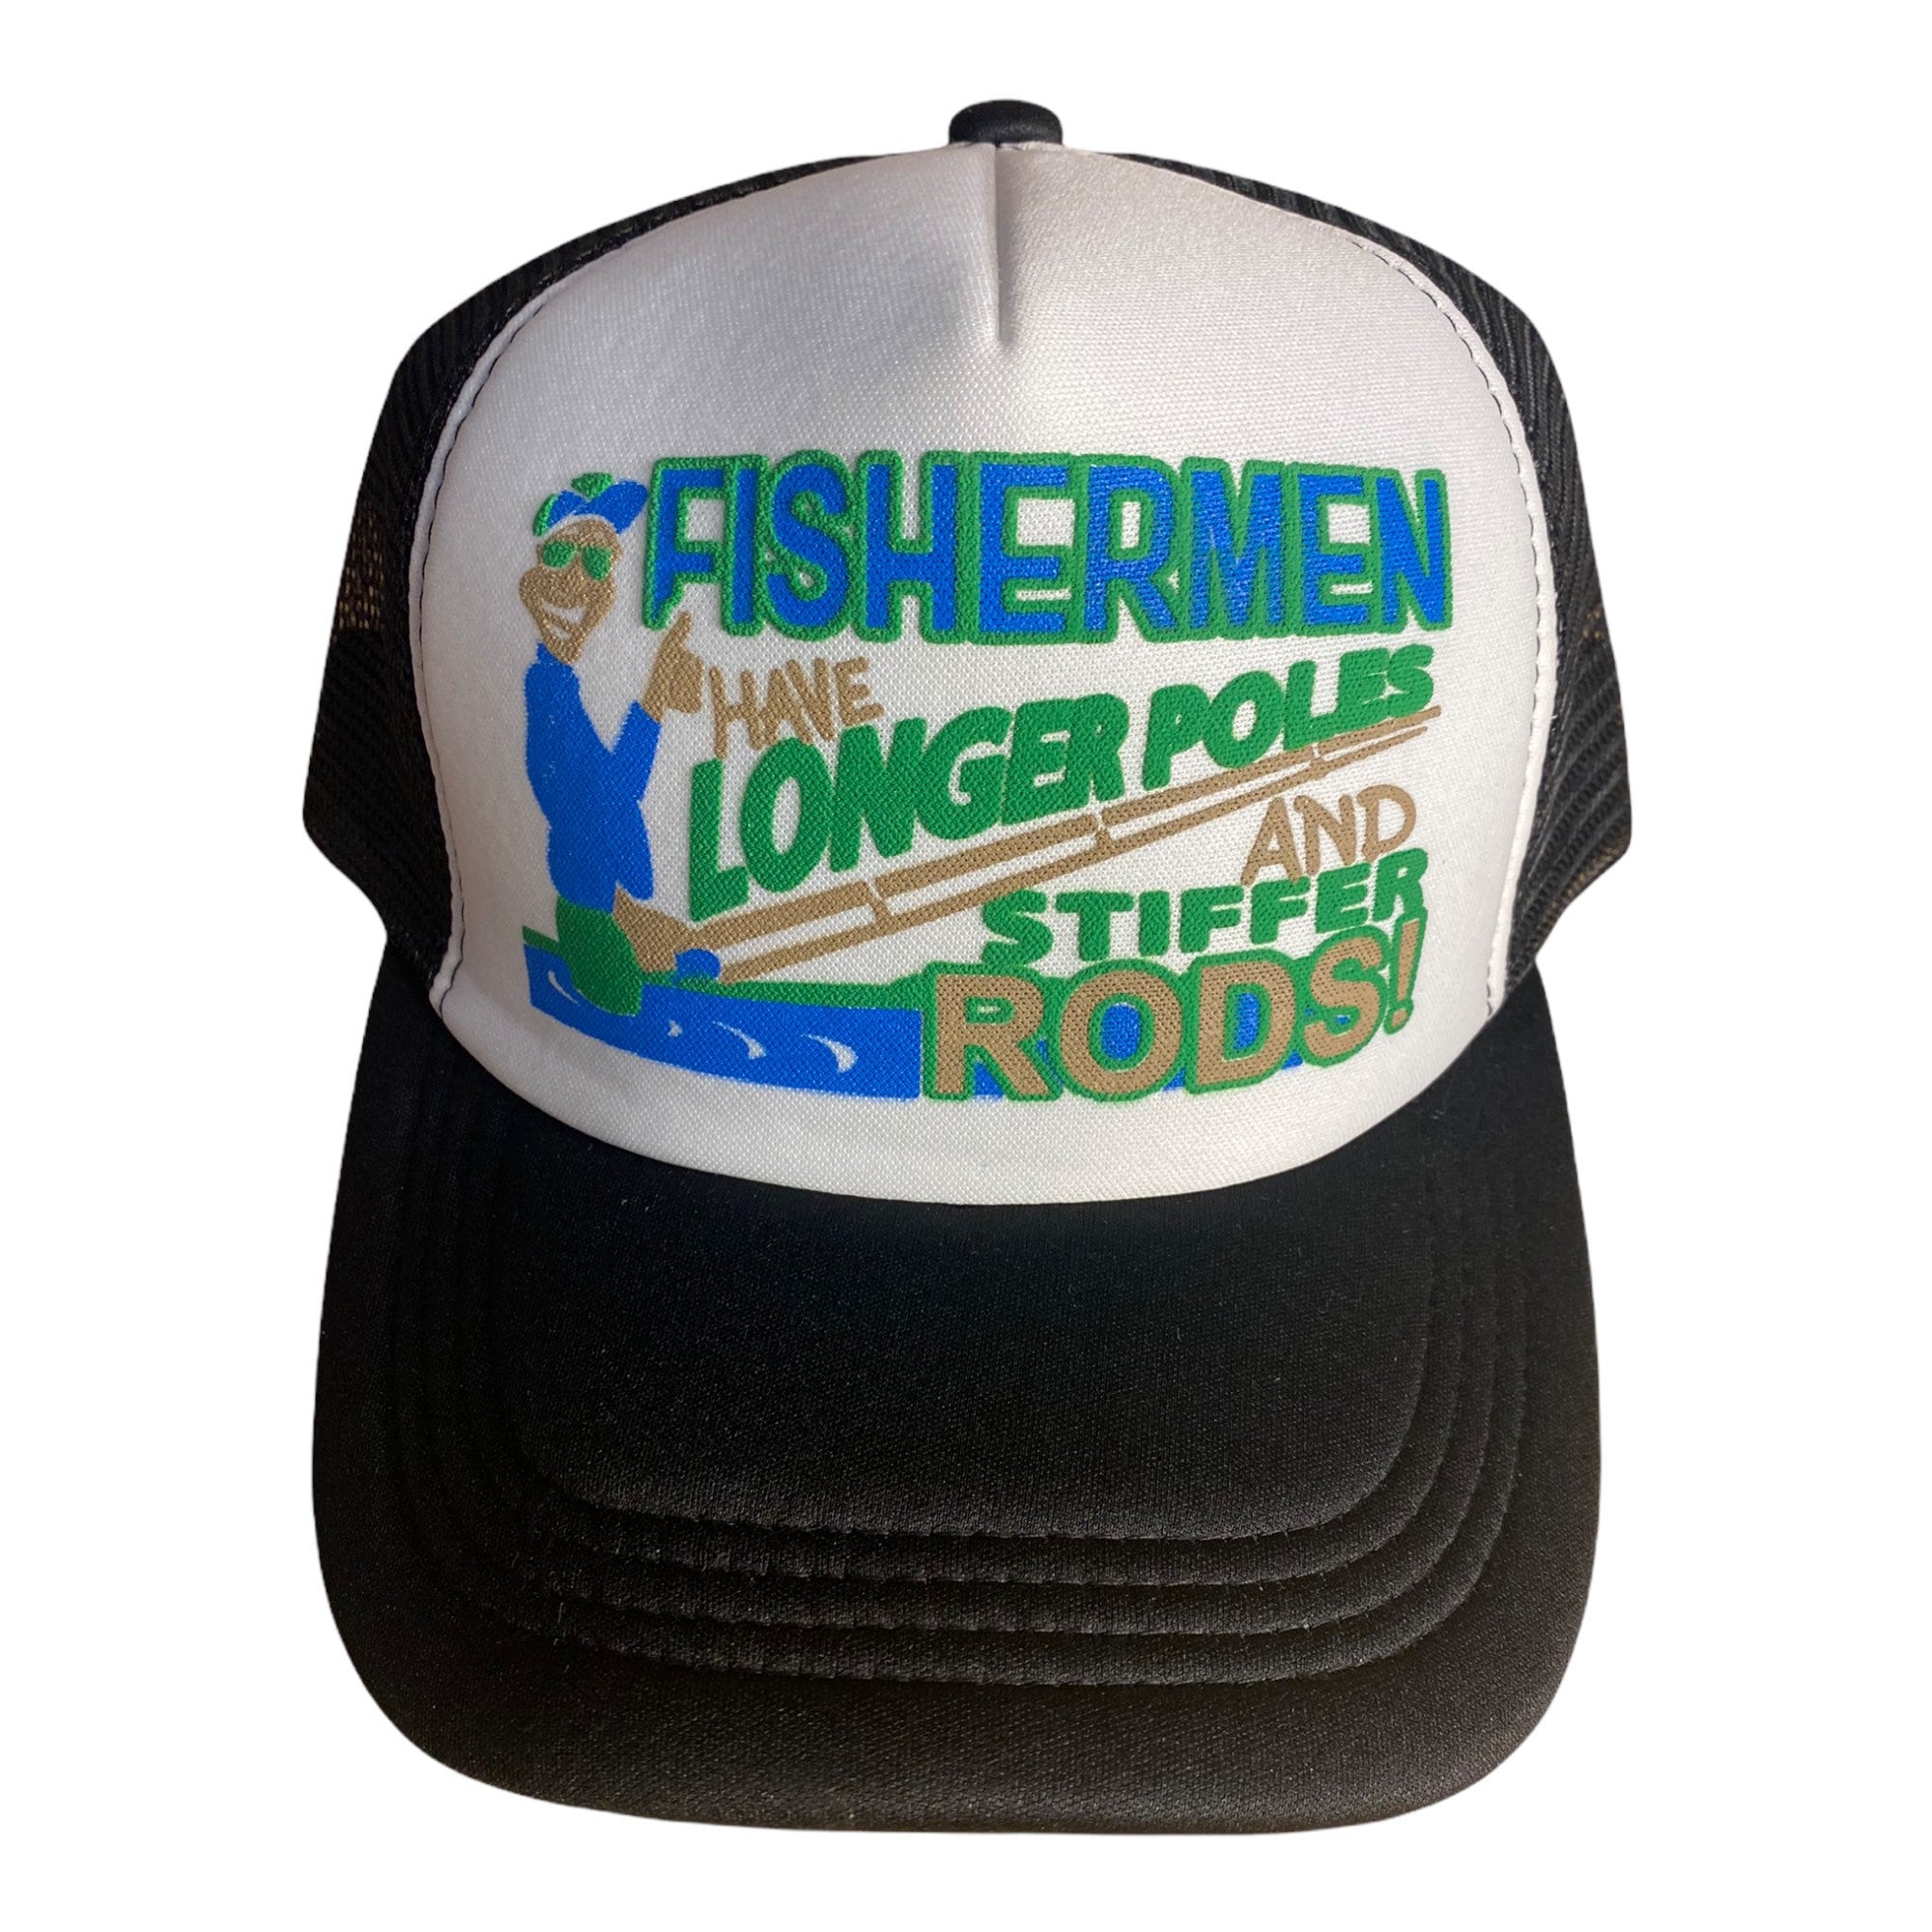 Vintage made in USA fishing hat/trucker hat not sure - Depop